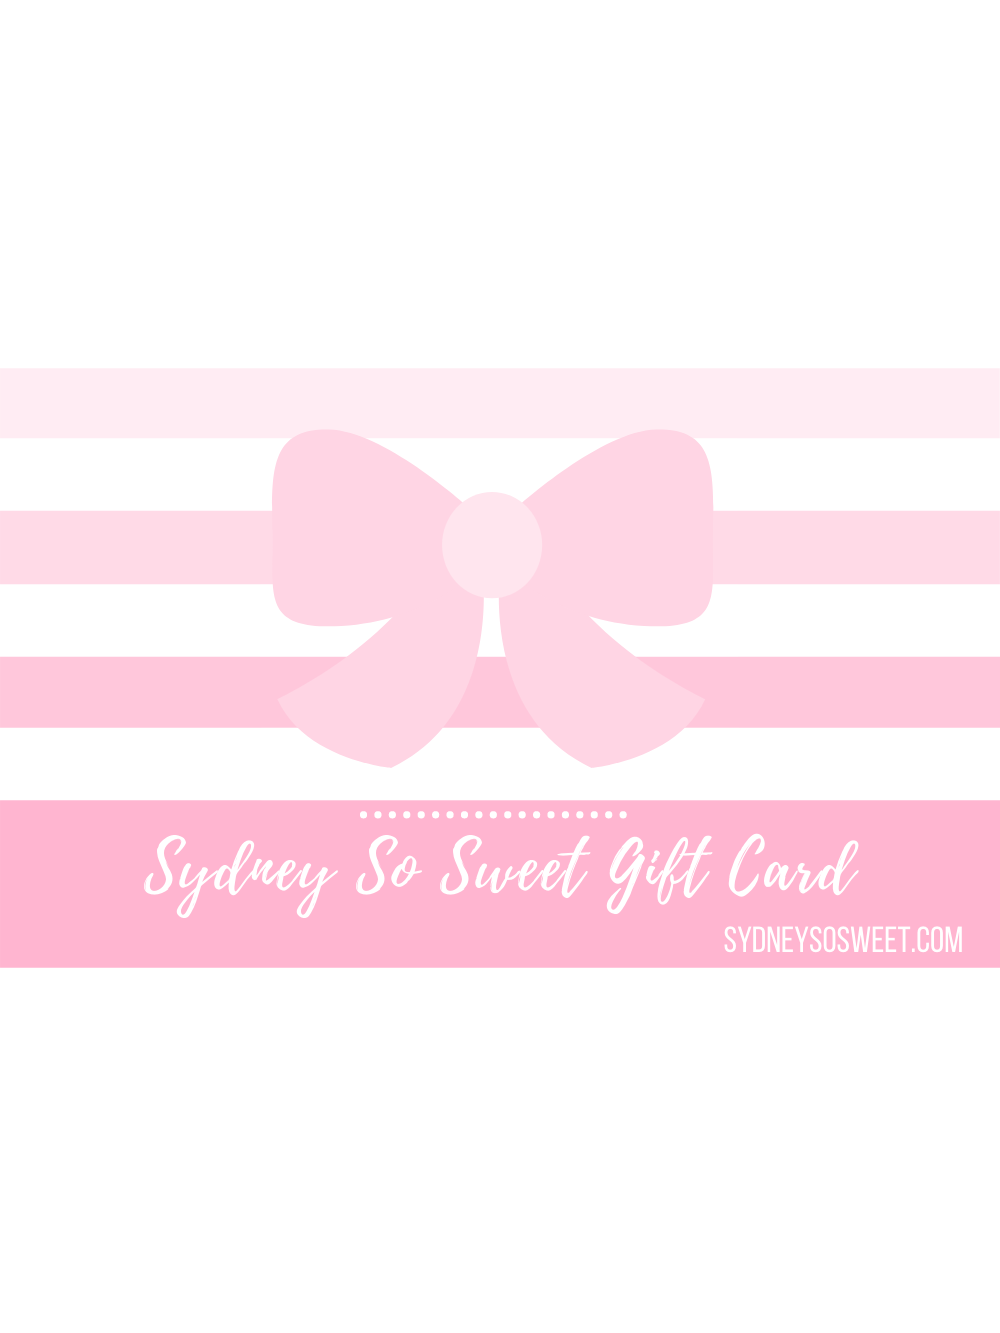 Sydney So Sweet Gift Card - Sydney So Sweet